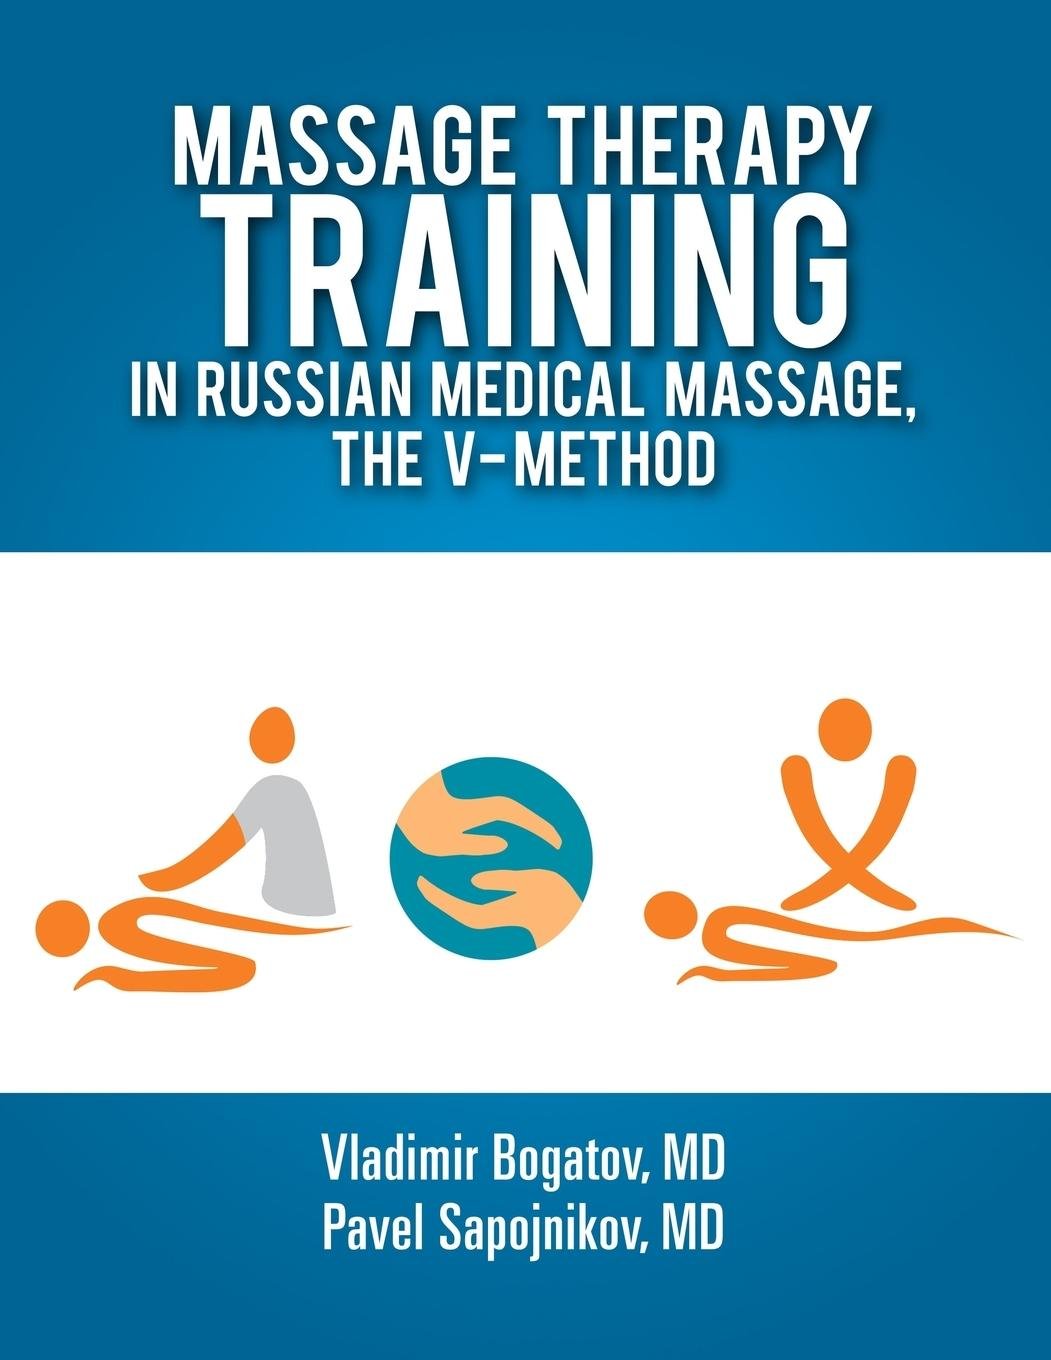 „Pavel Sapojnikov, Massage Therapy Training in Russian Medical Massage ...